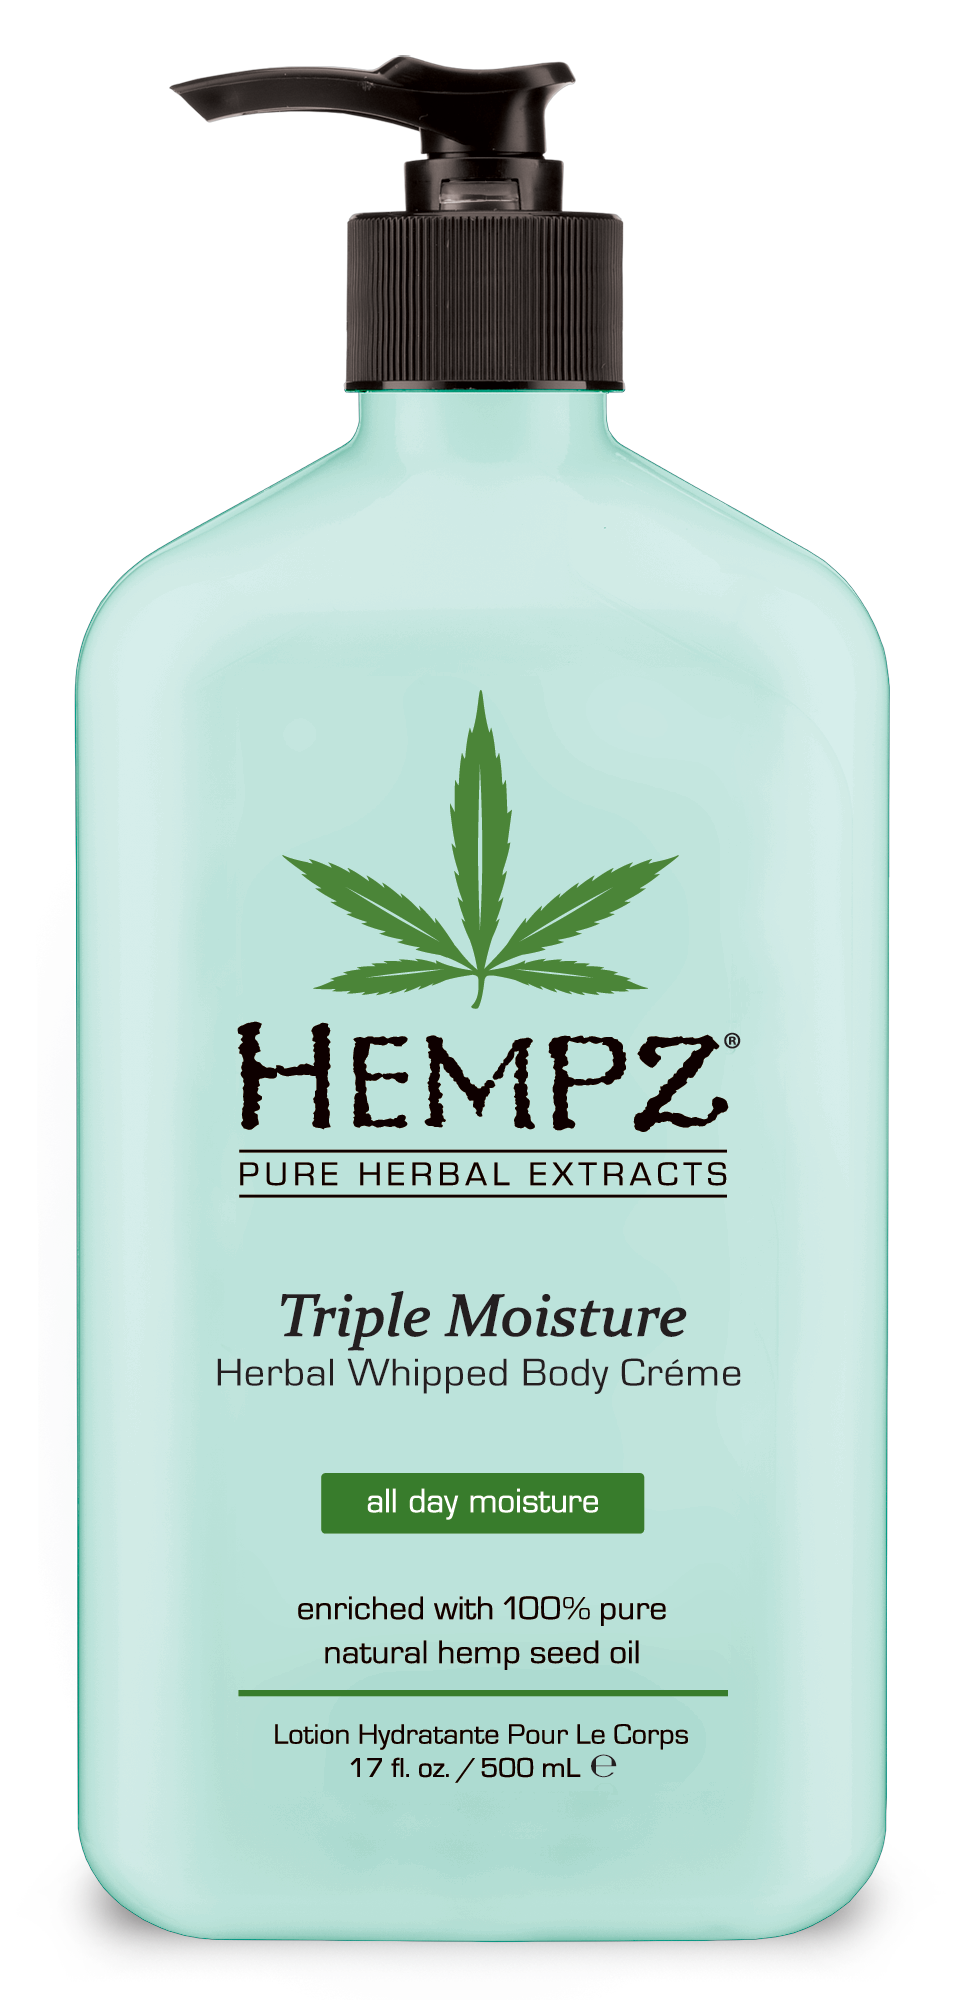 Triple Moisture Herbal Whipped Body Creme